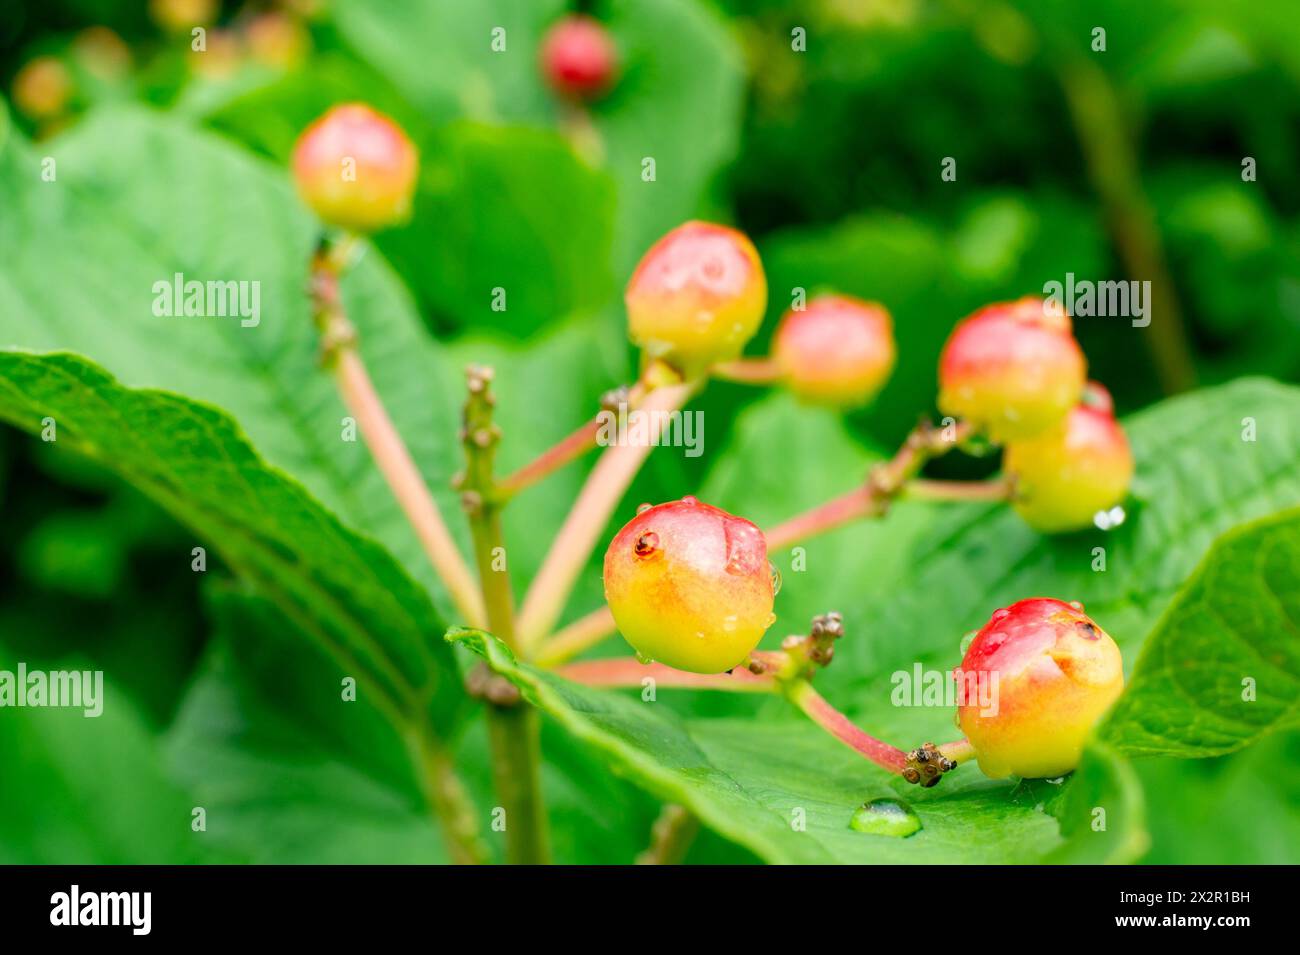 American cranberrybush (Viburnum trilobum) plant on green background Stock Photo